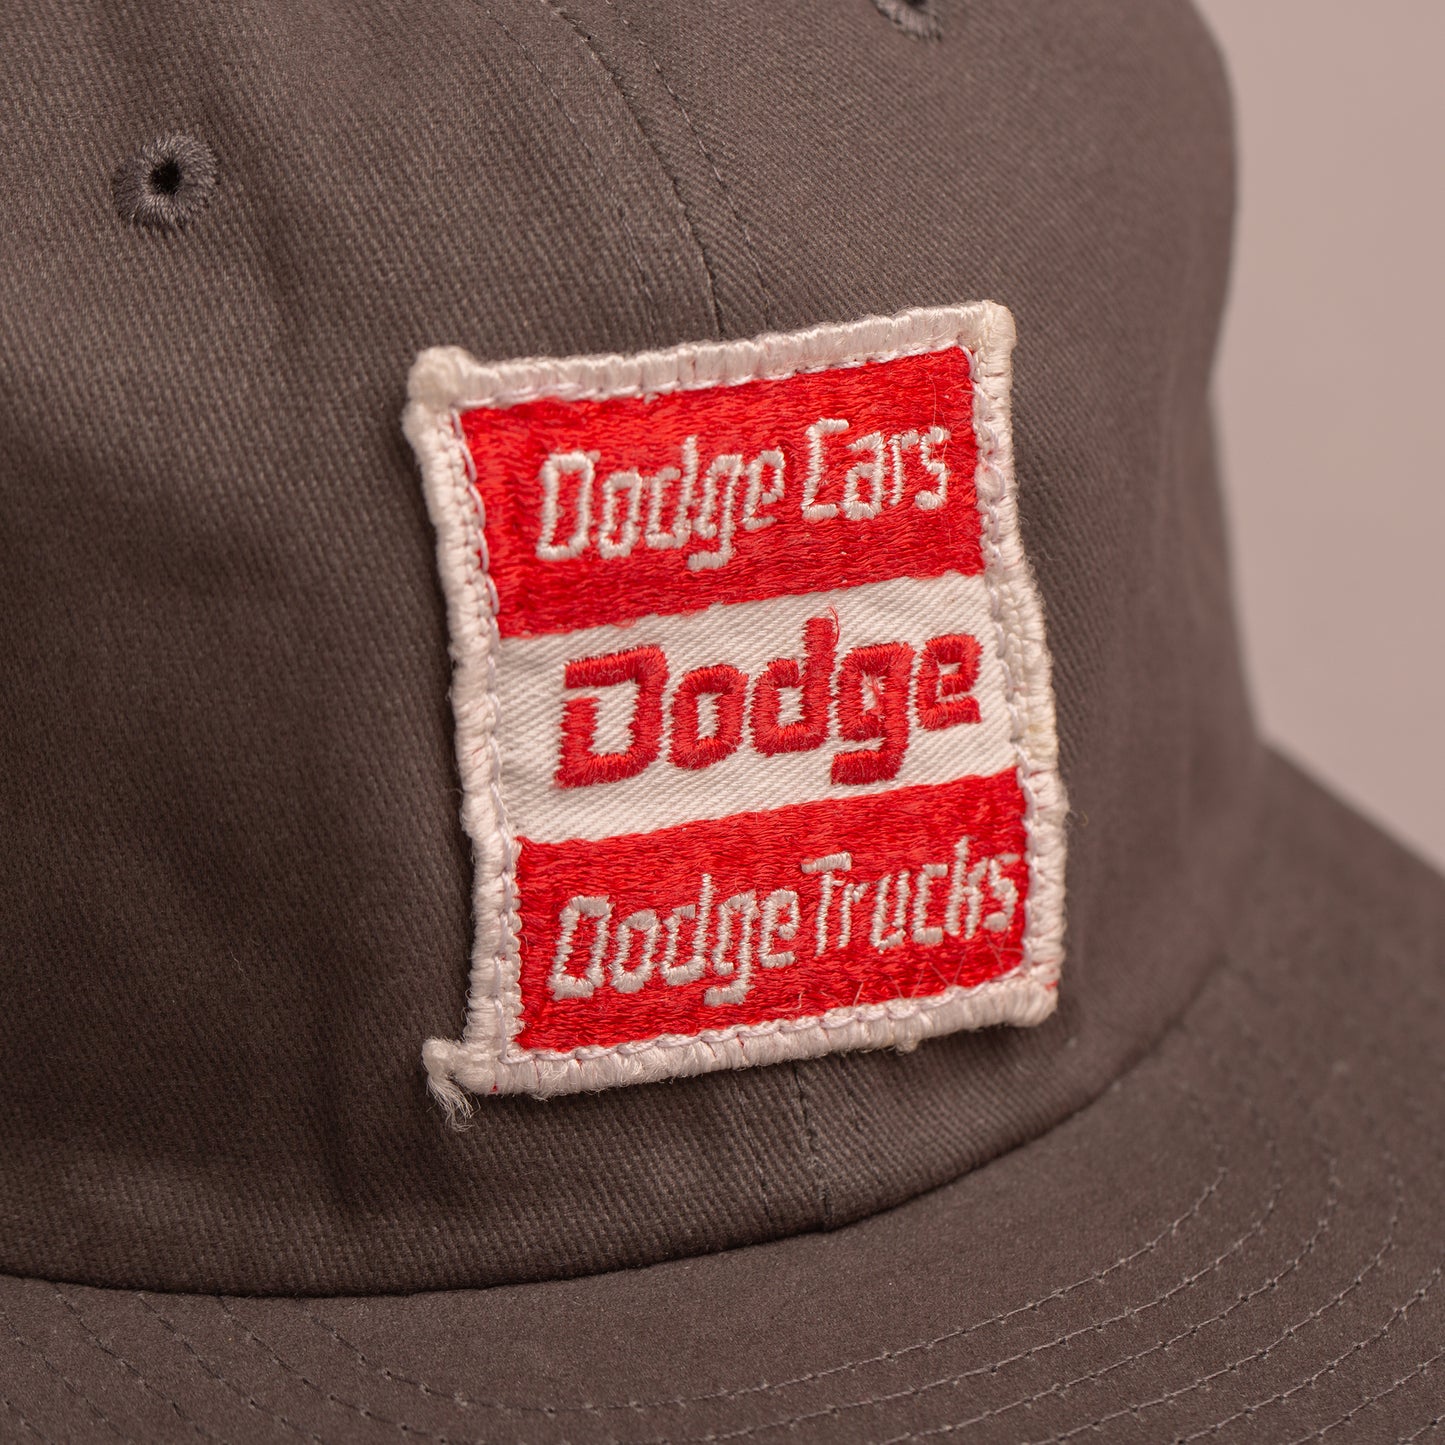 Dodge Cars Trucks Weld Cap